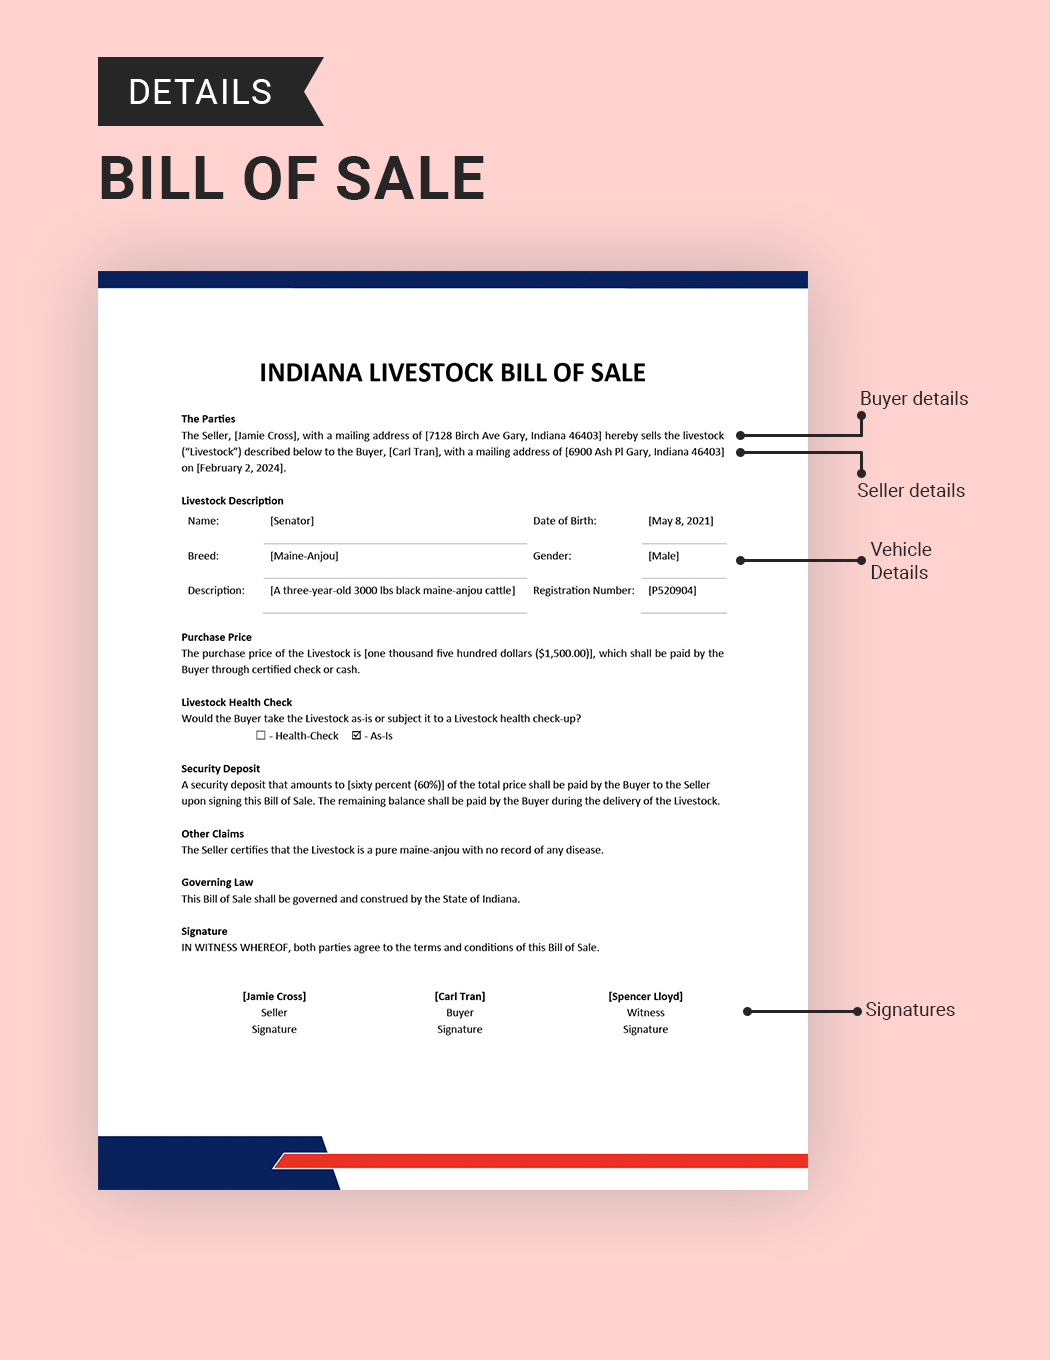 Indiana Livestock Bill of Sale Template